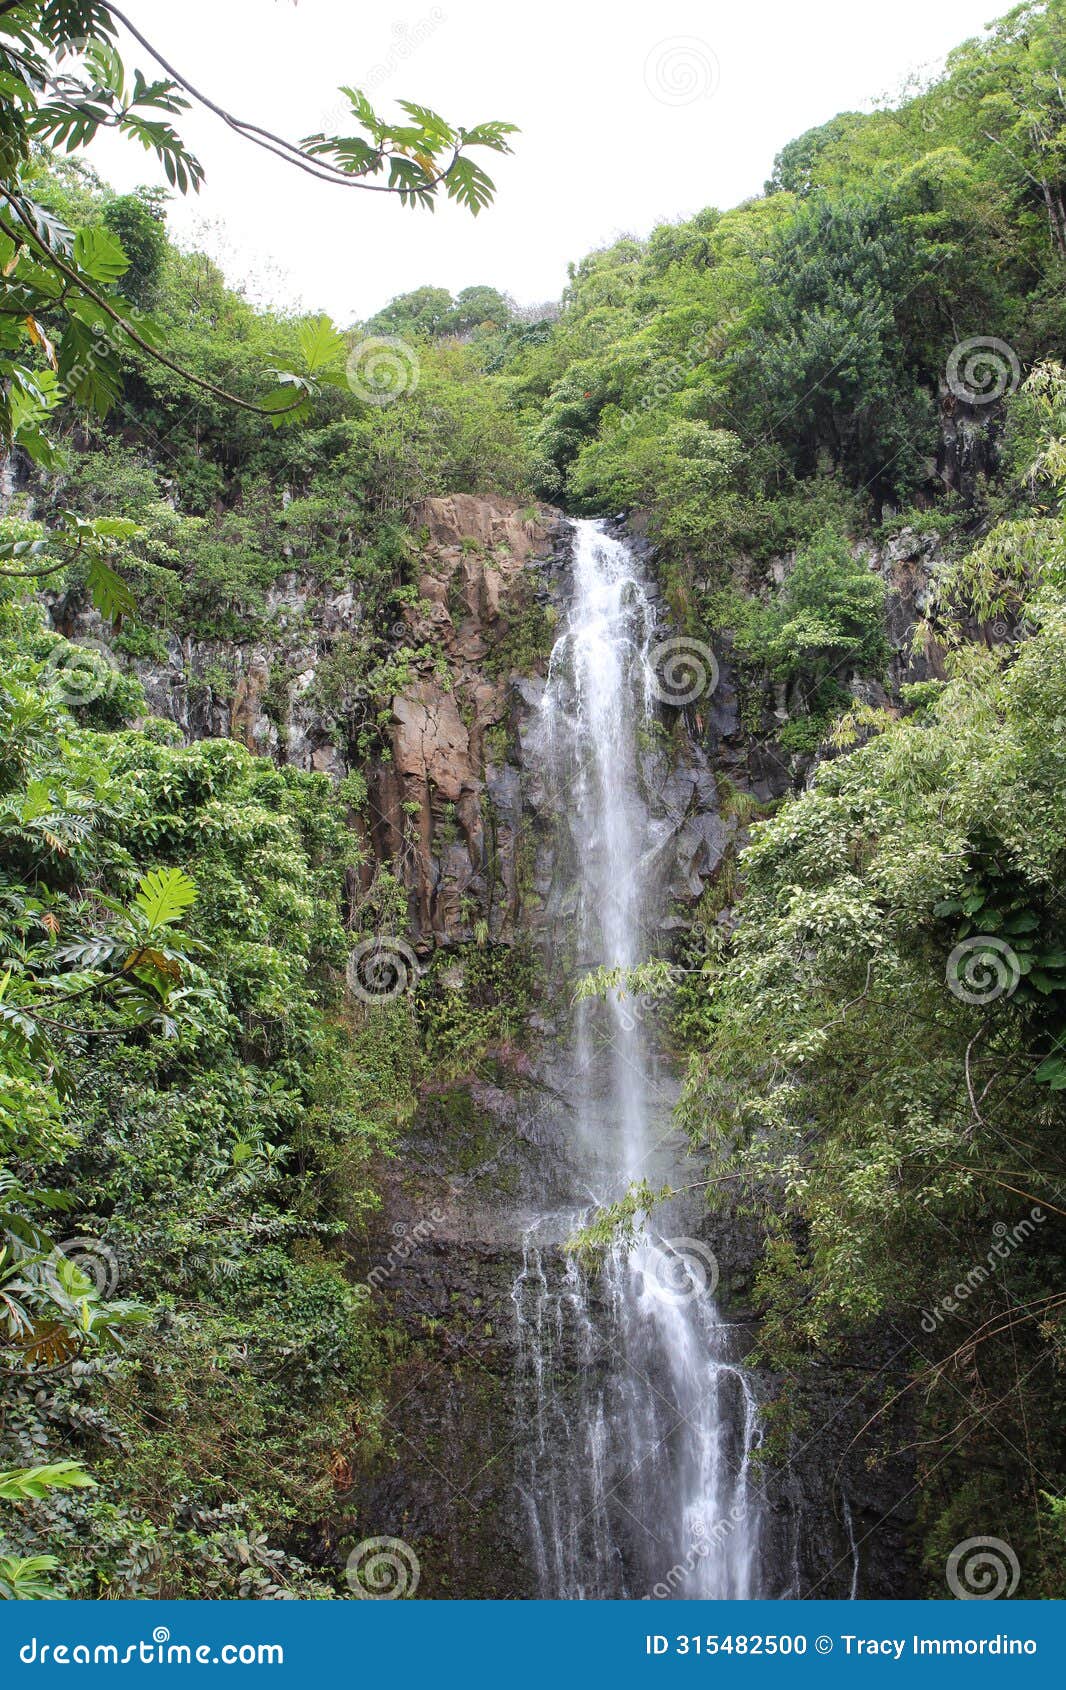 wailua falls tumbling over a volcanic rock cliffside in a rainforest in hana, maui, hawaii